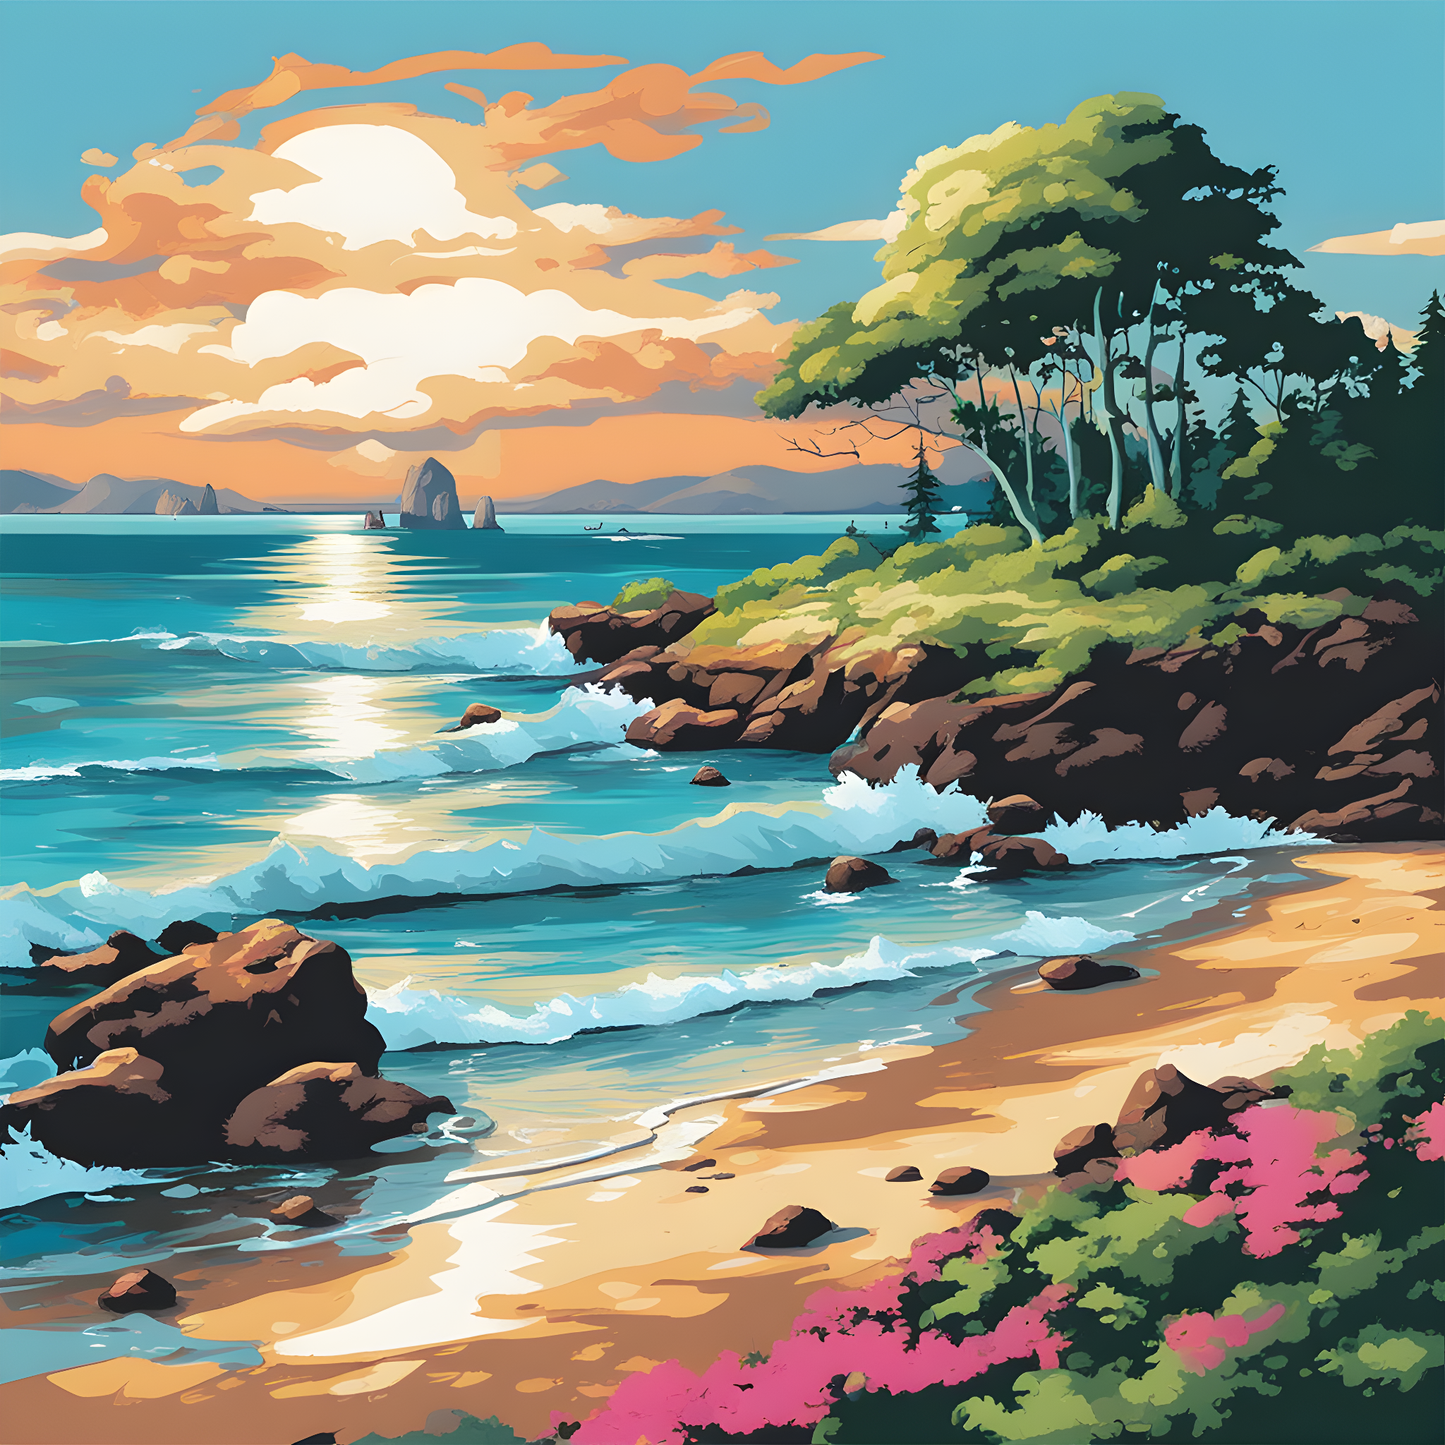 Lost Island Seaside Landscape - Van-Go Paint-By-Number Kit